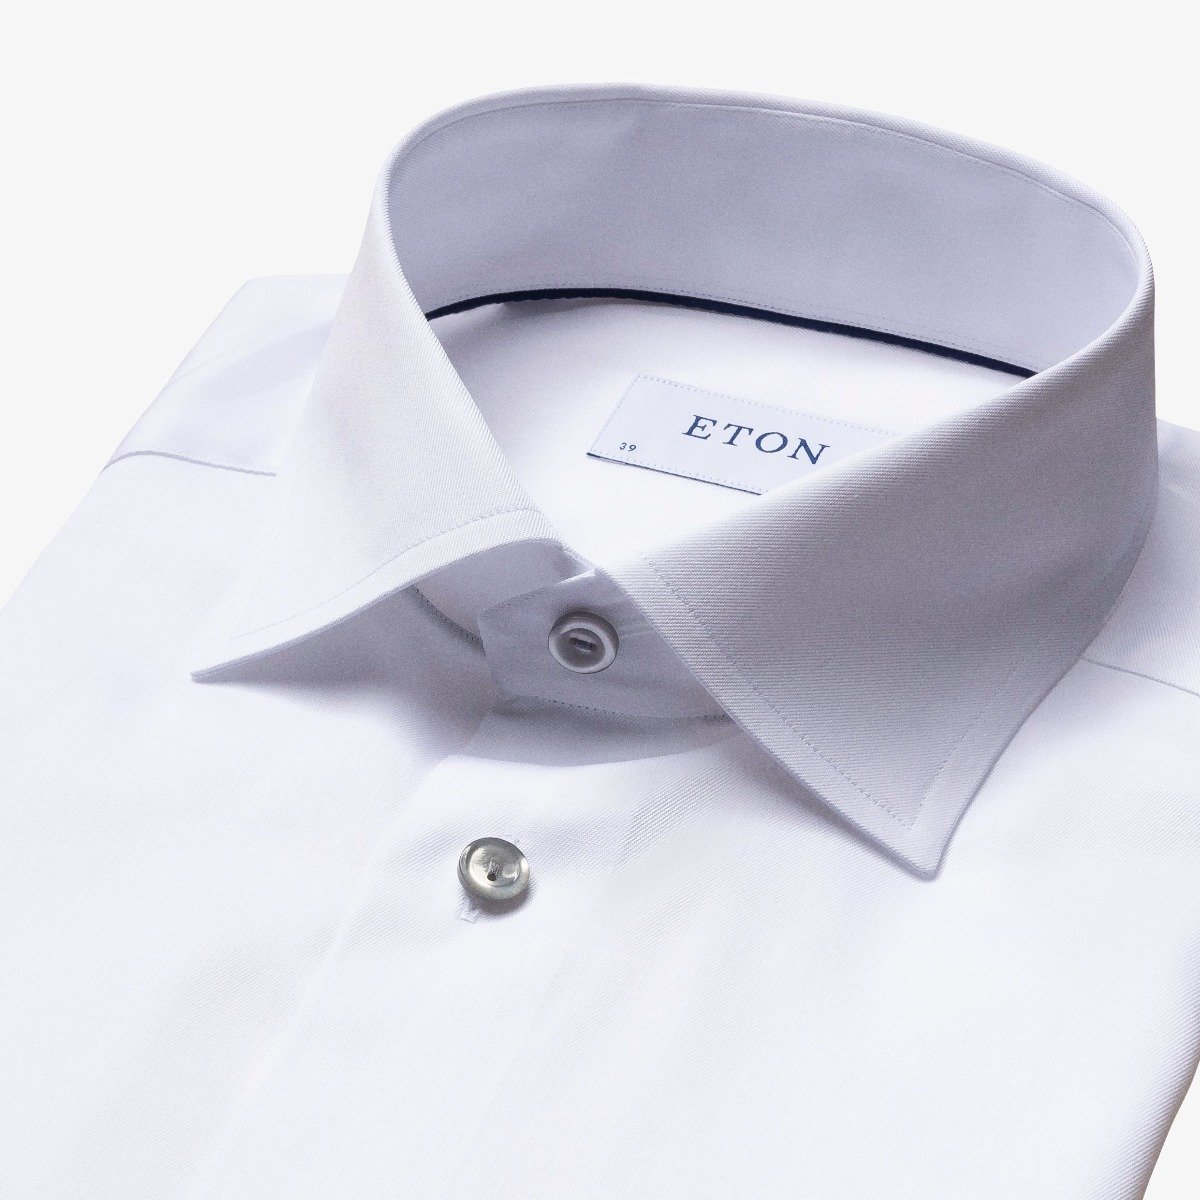 Eton white slim fit signature twill shirt - grey buttons